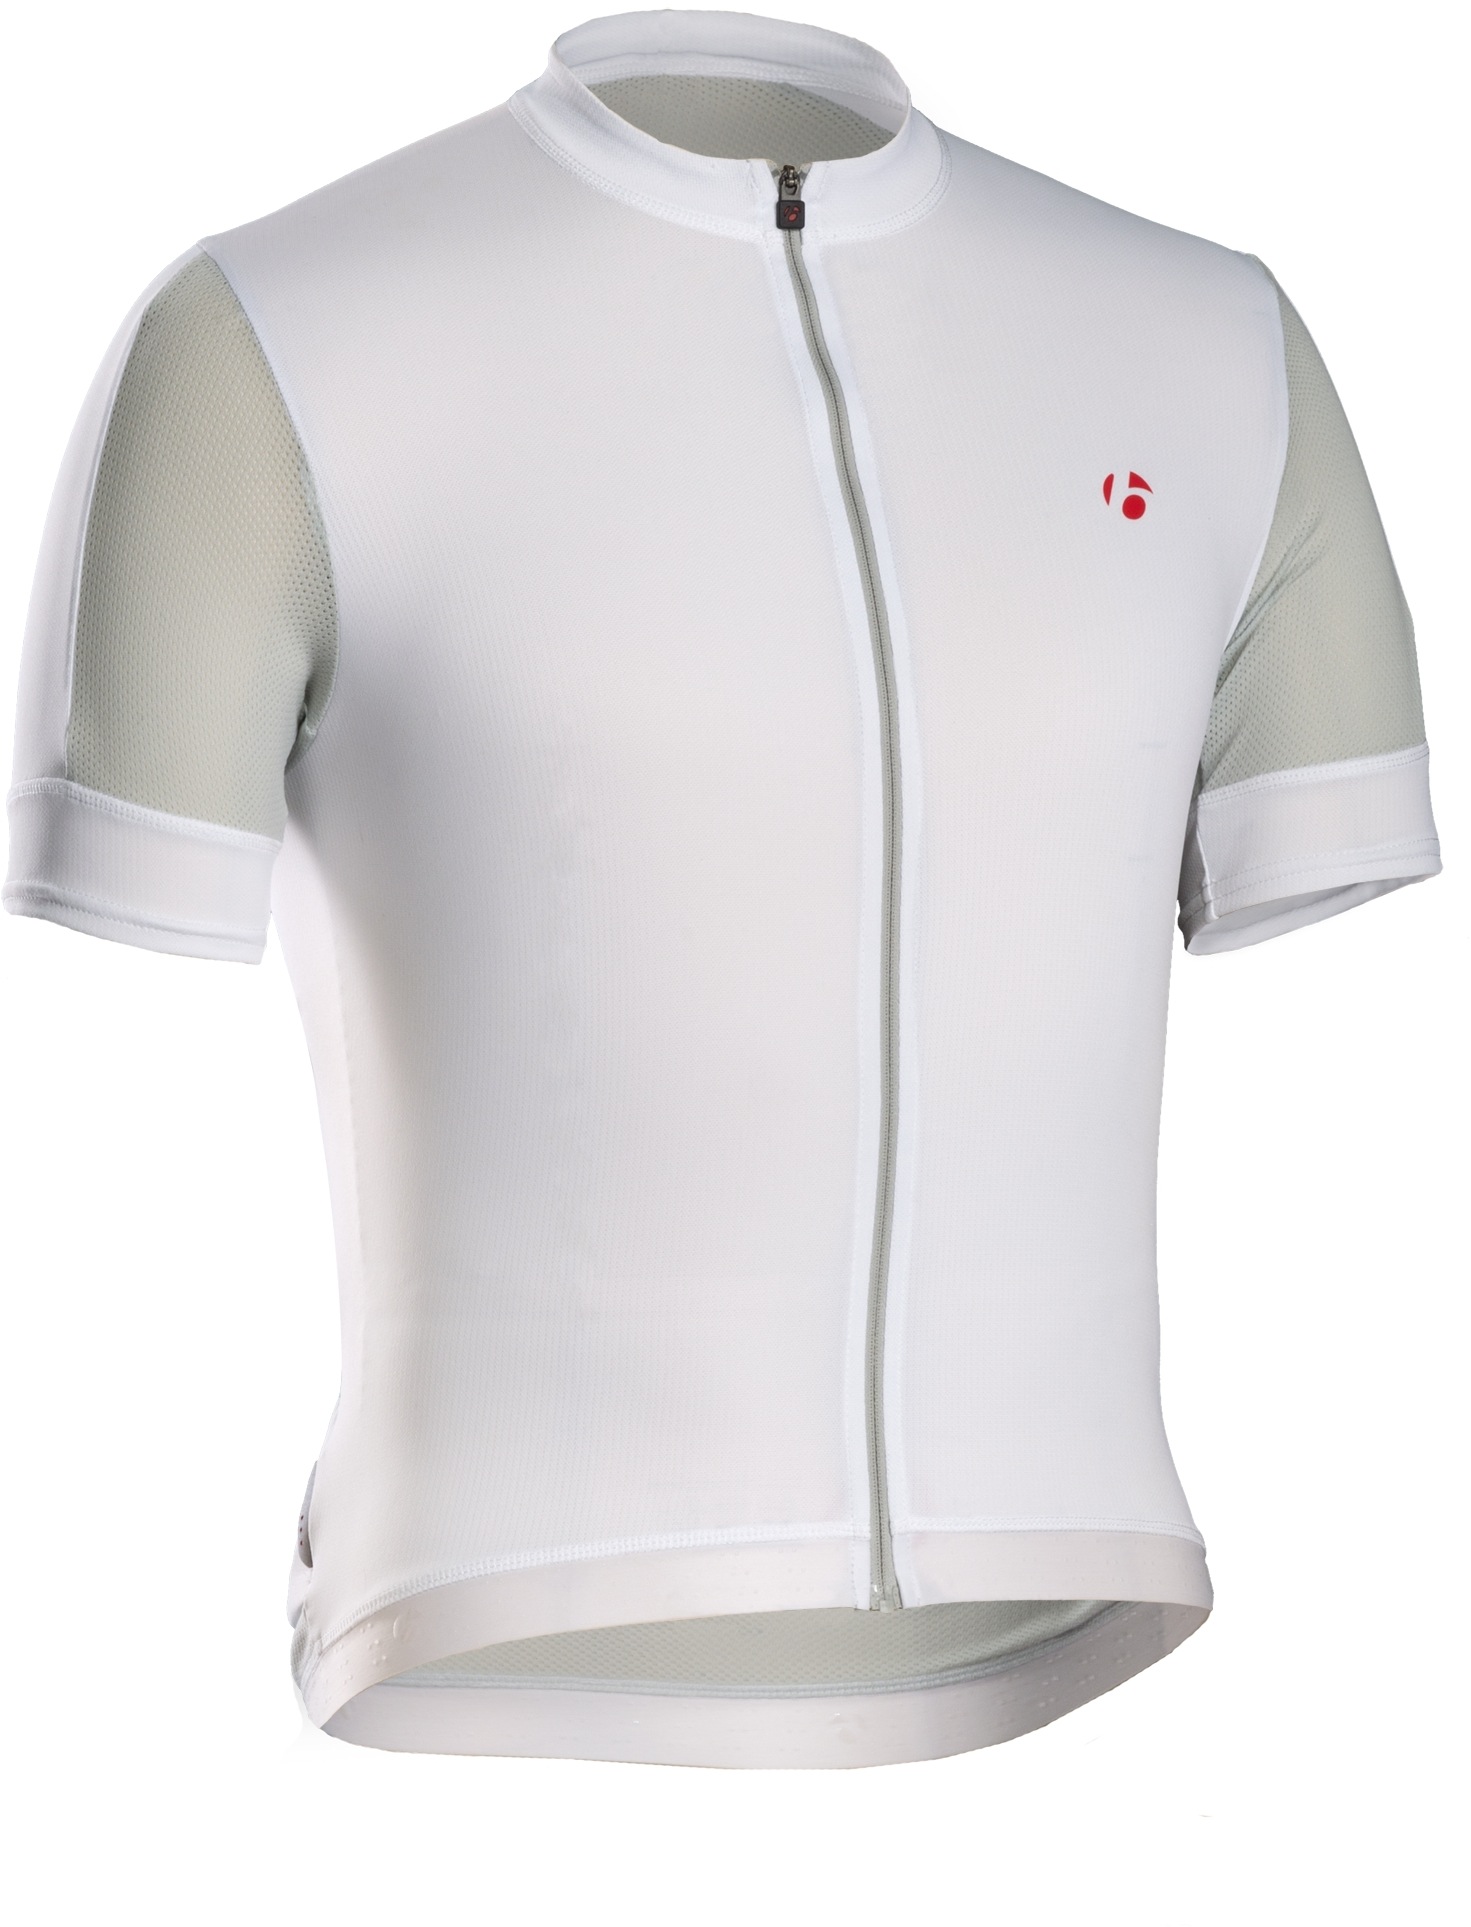 Bontrager RXL Cycling Jersey - Mens - Jerseys - Clothing - Shop | Nevis ...